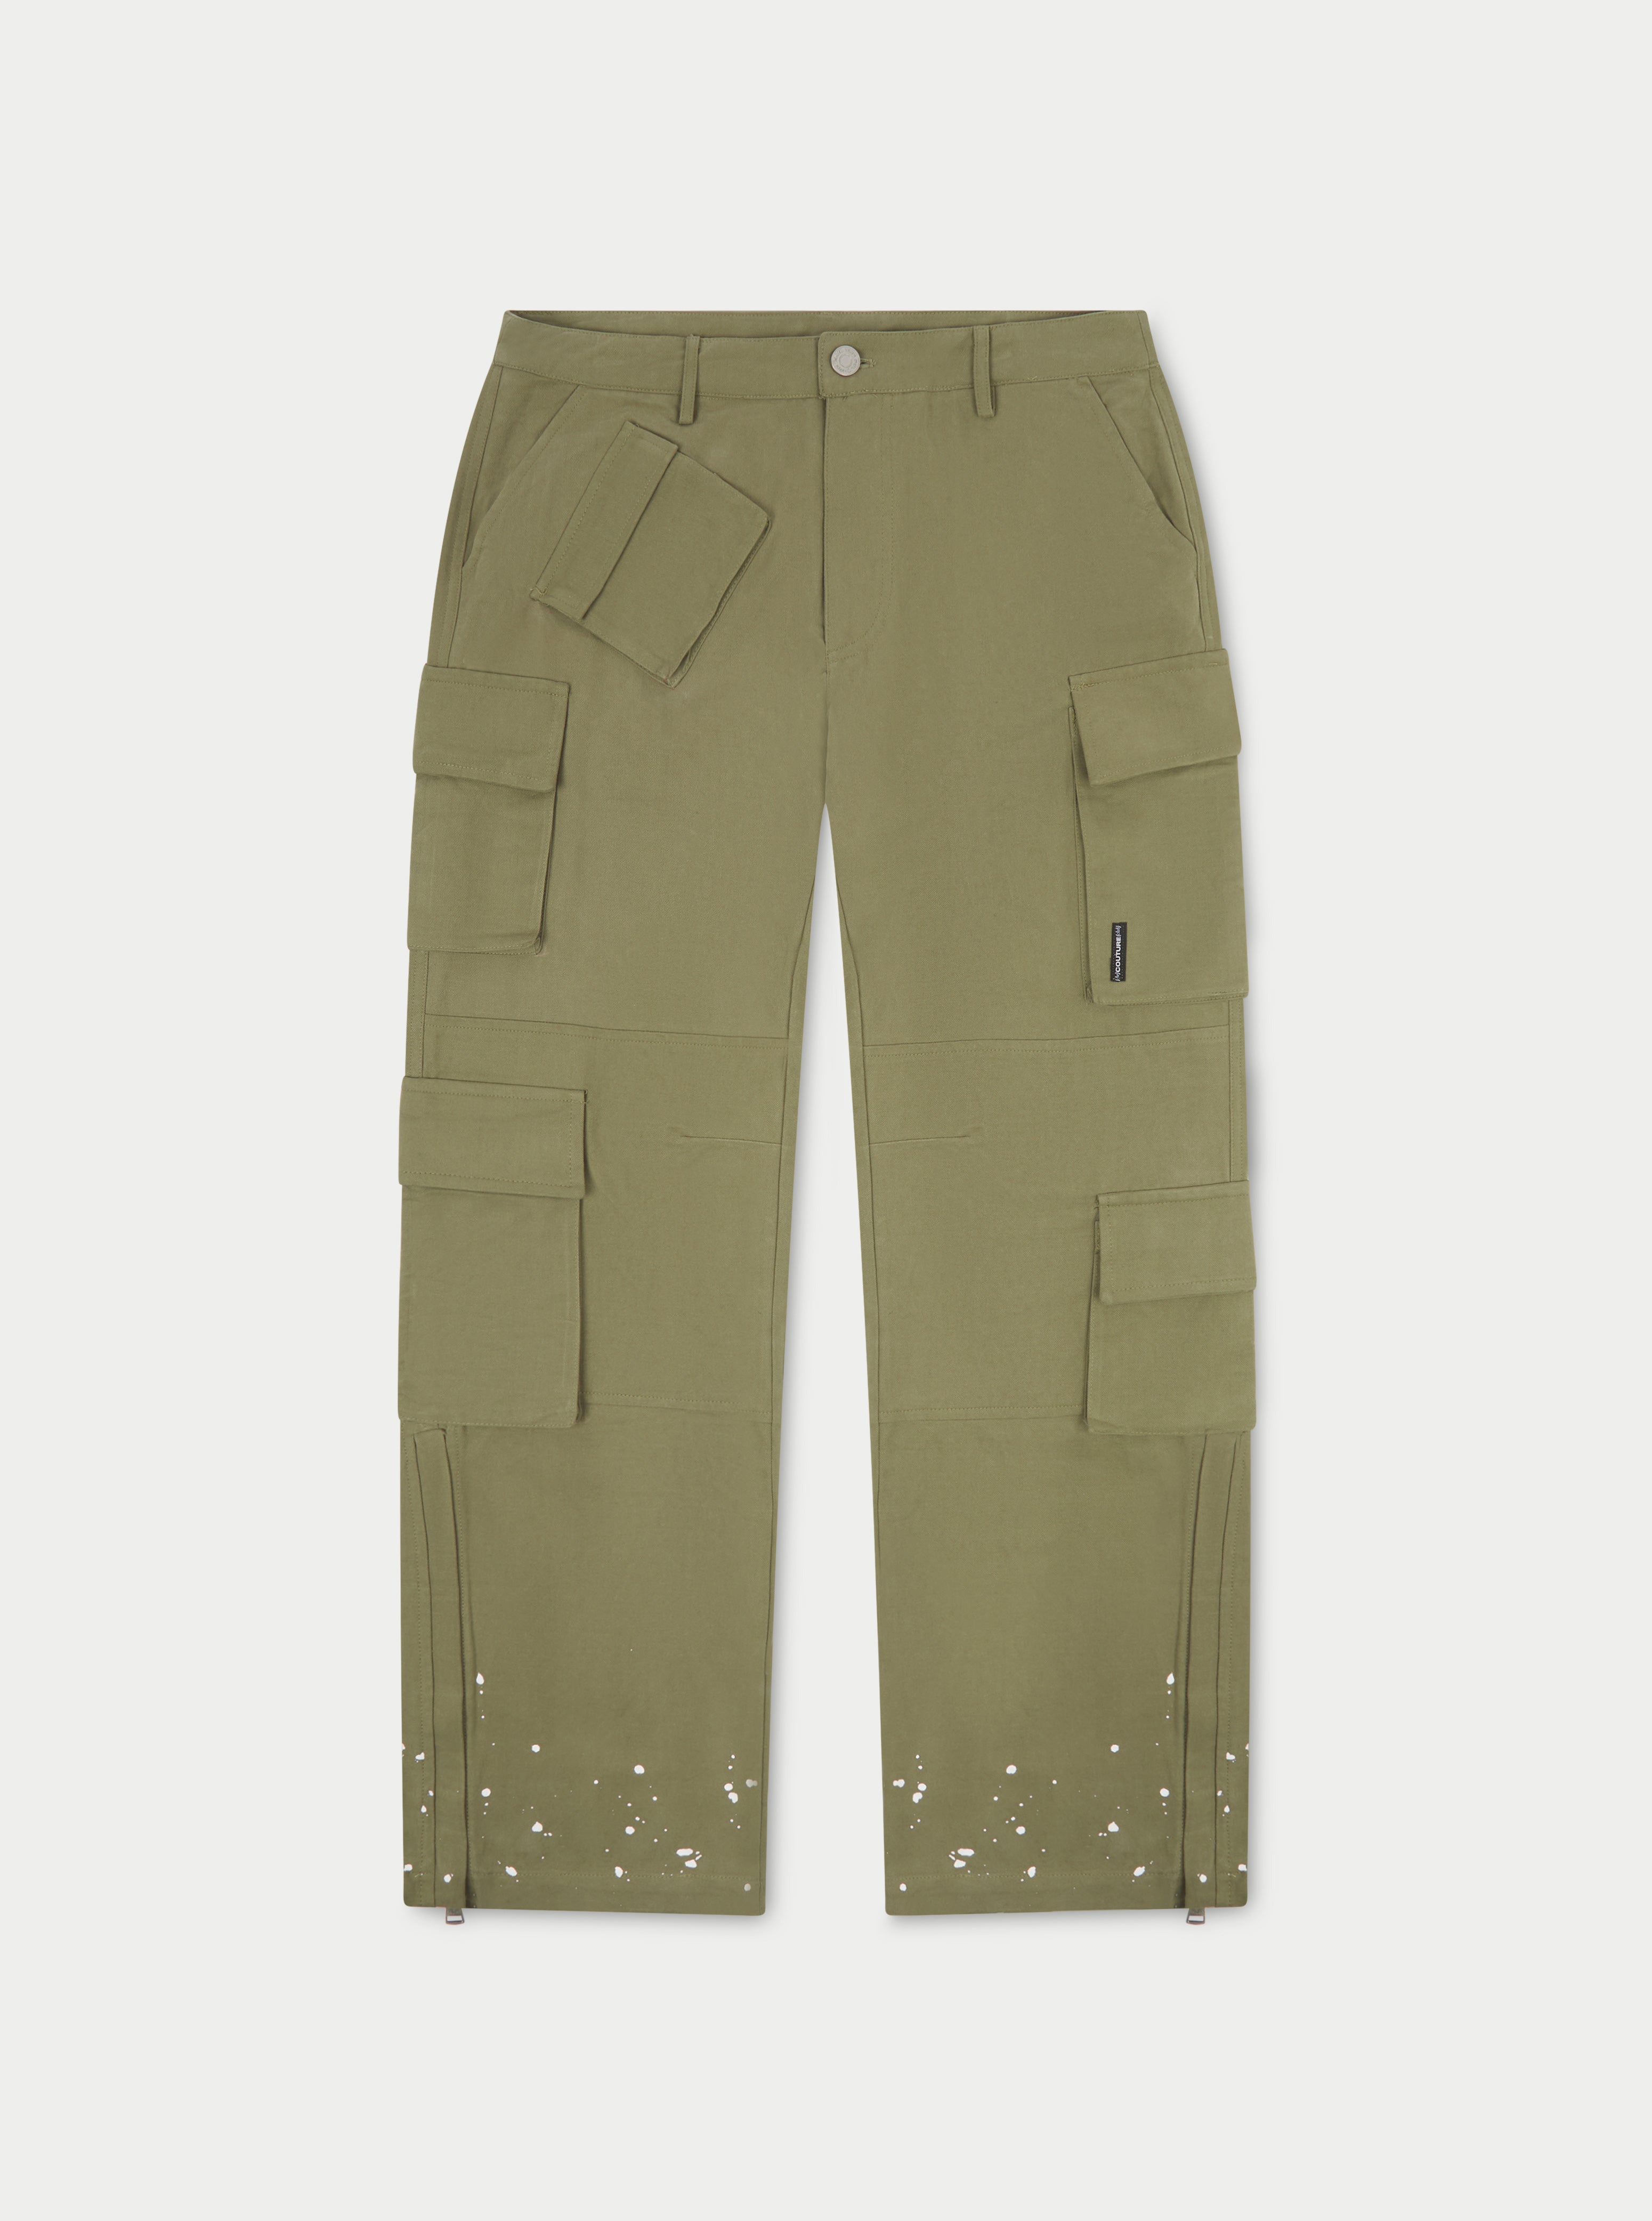 Loose Drawstring Pocket Athletic Denim Cargo Pants, Cargo Pant for Men, Pocket  Cargo Pant, Polyester Cargo Pant, कार्गो पैंट - Hari Krushna Enterprise,  Surat | ID: 2852782612897